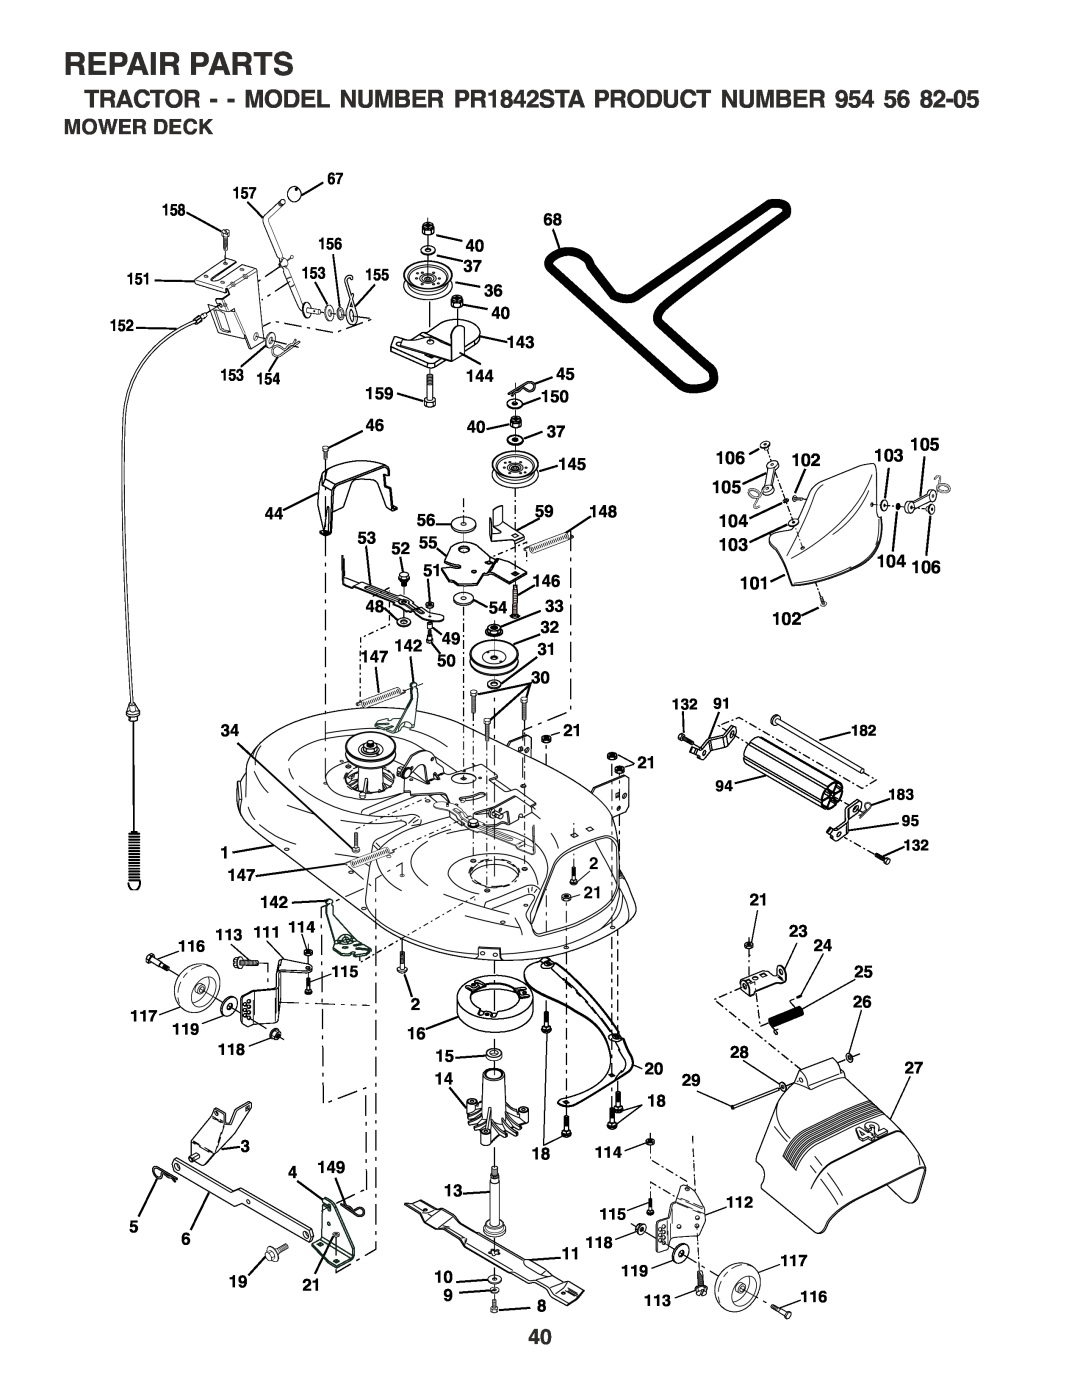 Poulan 181347 owner manual Mower Deck, Repair Parts, TRACTOR - - MODEL NUMBER PR1842STA PRODUCT NUMBER 954 56, 103 104 